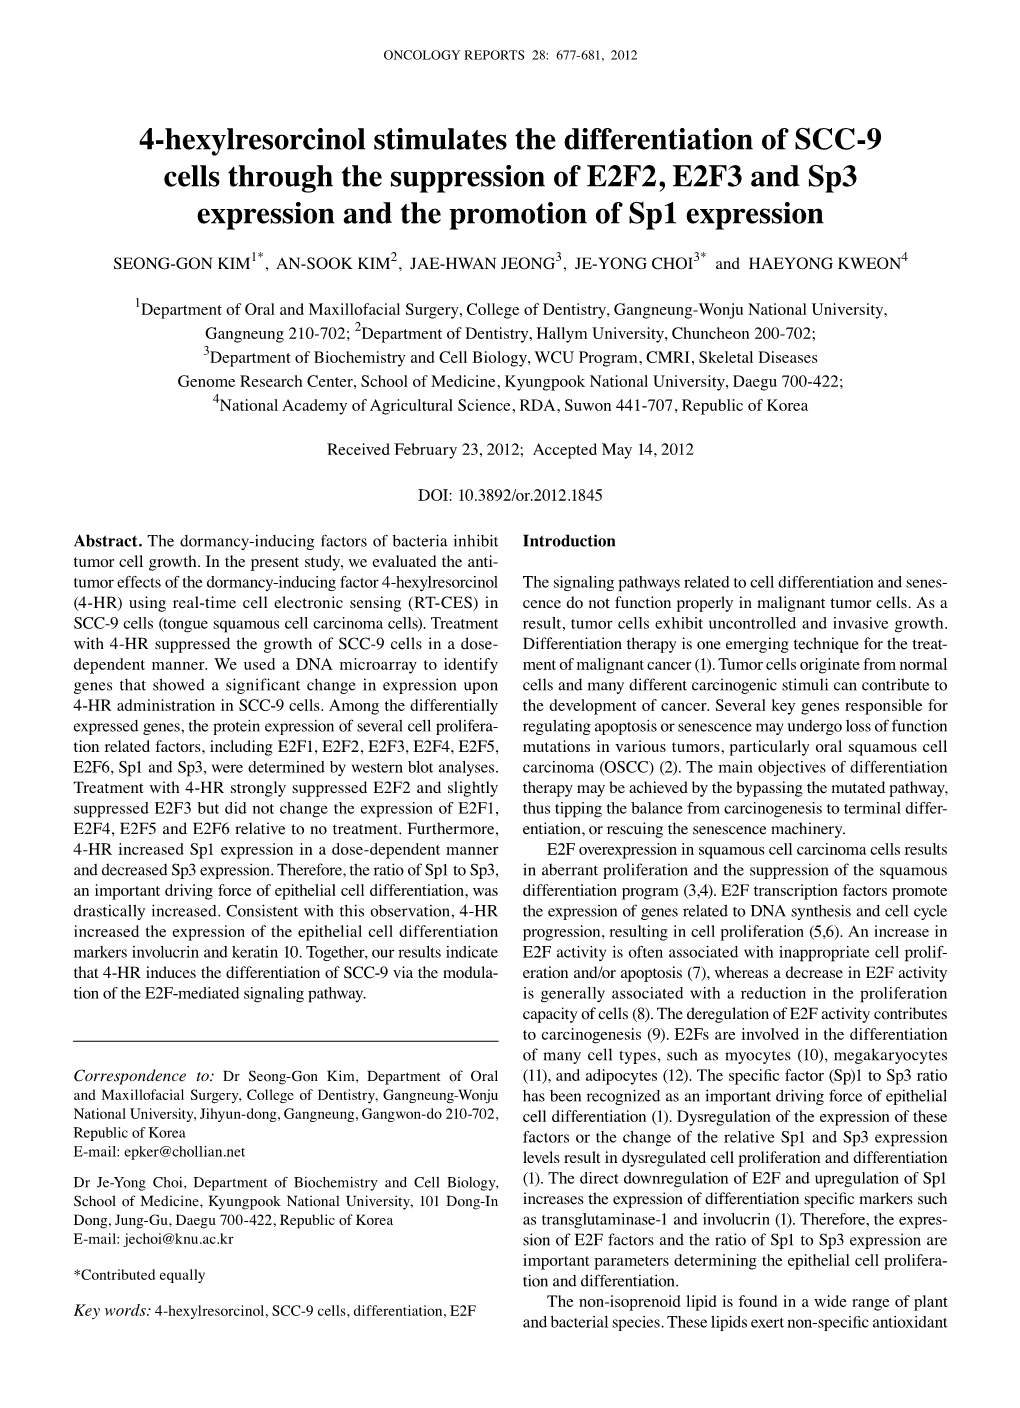 4-Hexylresorcinol Stimulates the Differentiation of SCC-9 Cells Through the Suppression of E2F2, E2F3 and Sp3 Expression and the Promotion of Sp1 Expression